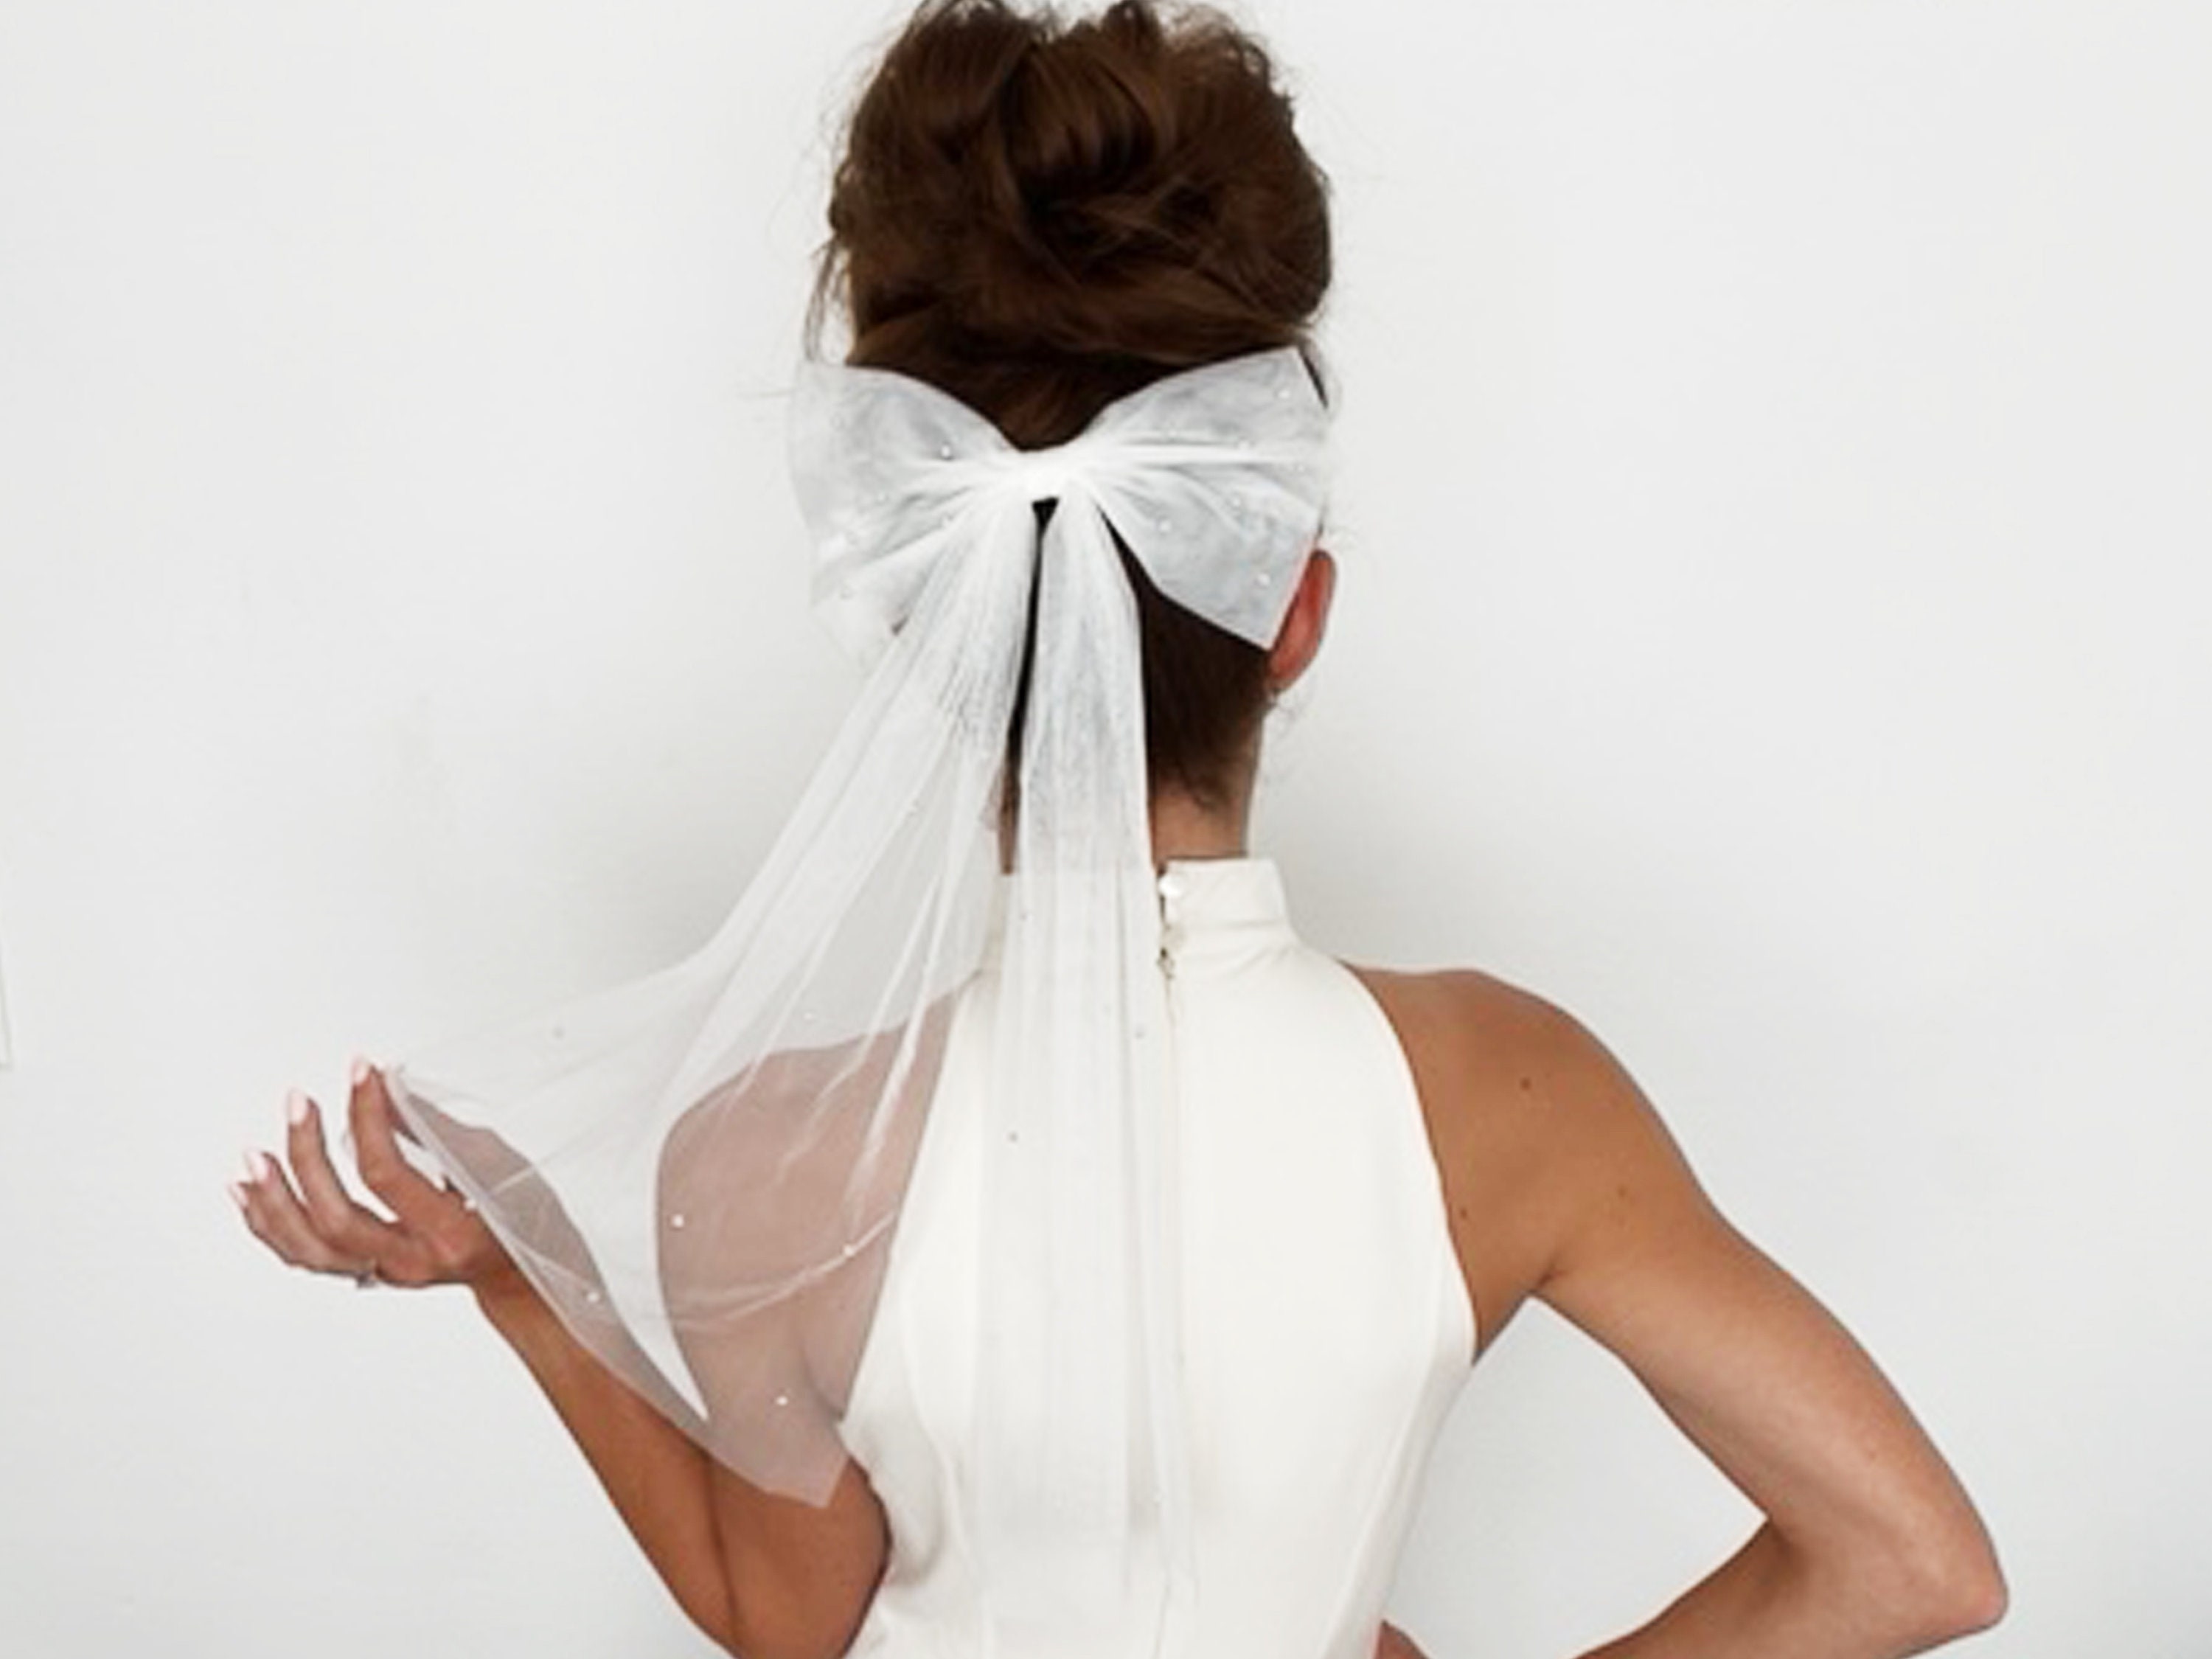 FanakoStudioNYC Korea Short Wedding Veil with Bow Tie Detail.